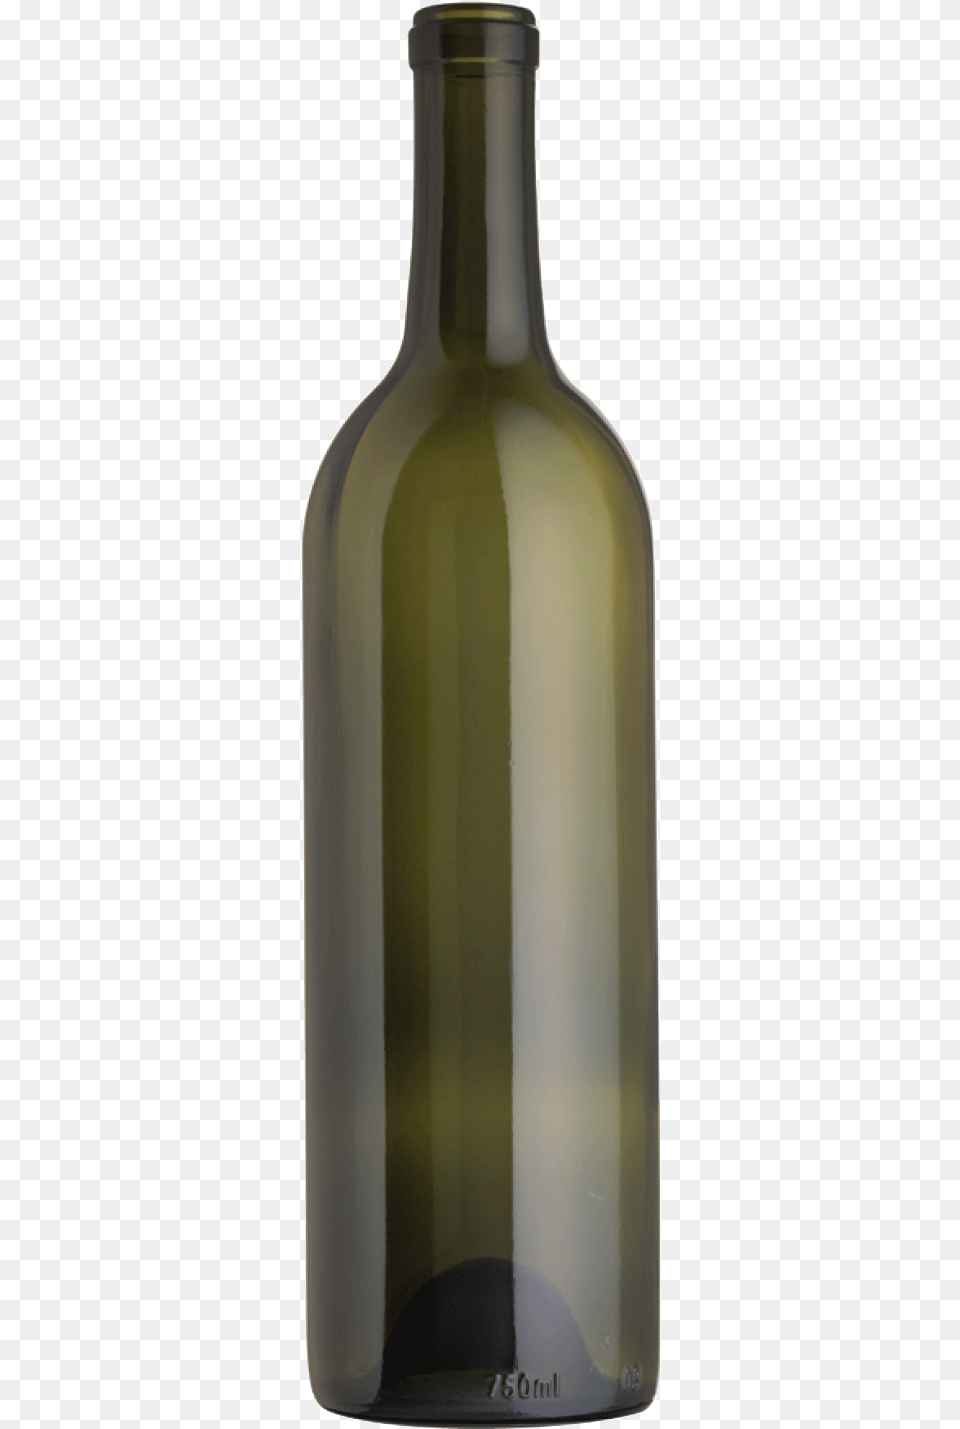 Bordeaux Wine Bottle Beer Champagne Wine Bottle, Alcohol, Beverage, Liquor, Wine Bottle Png